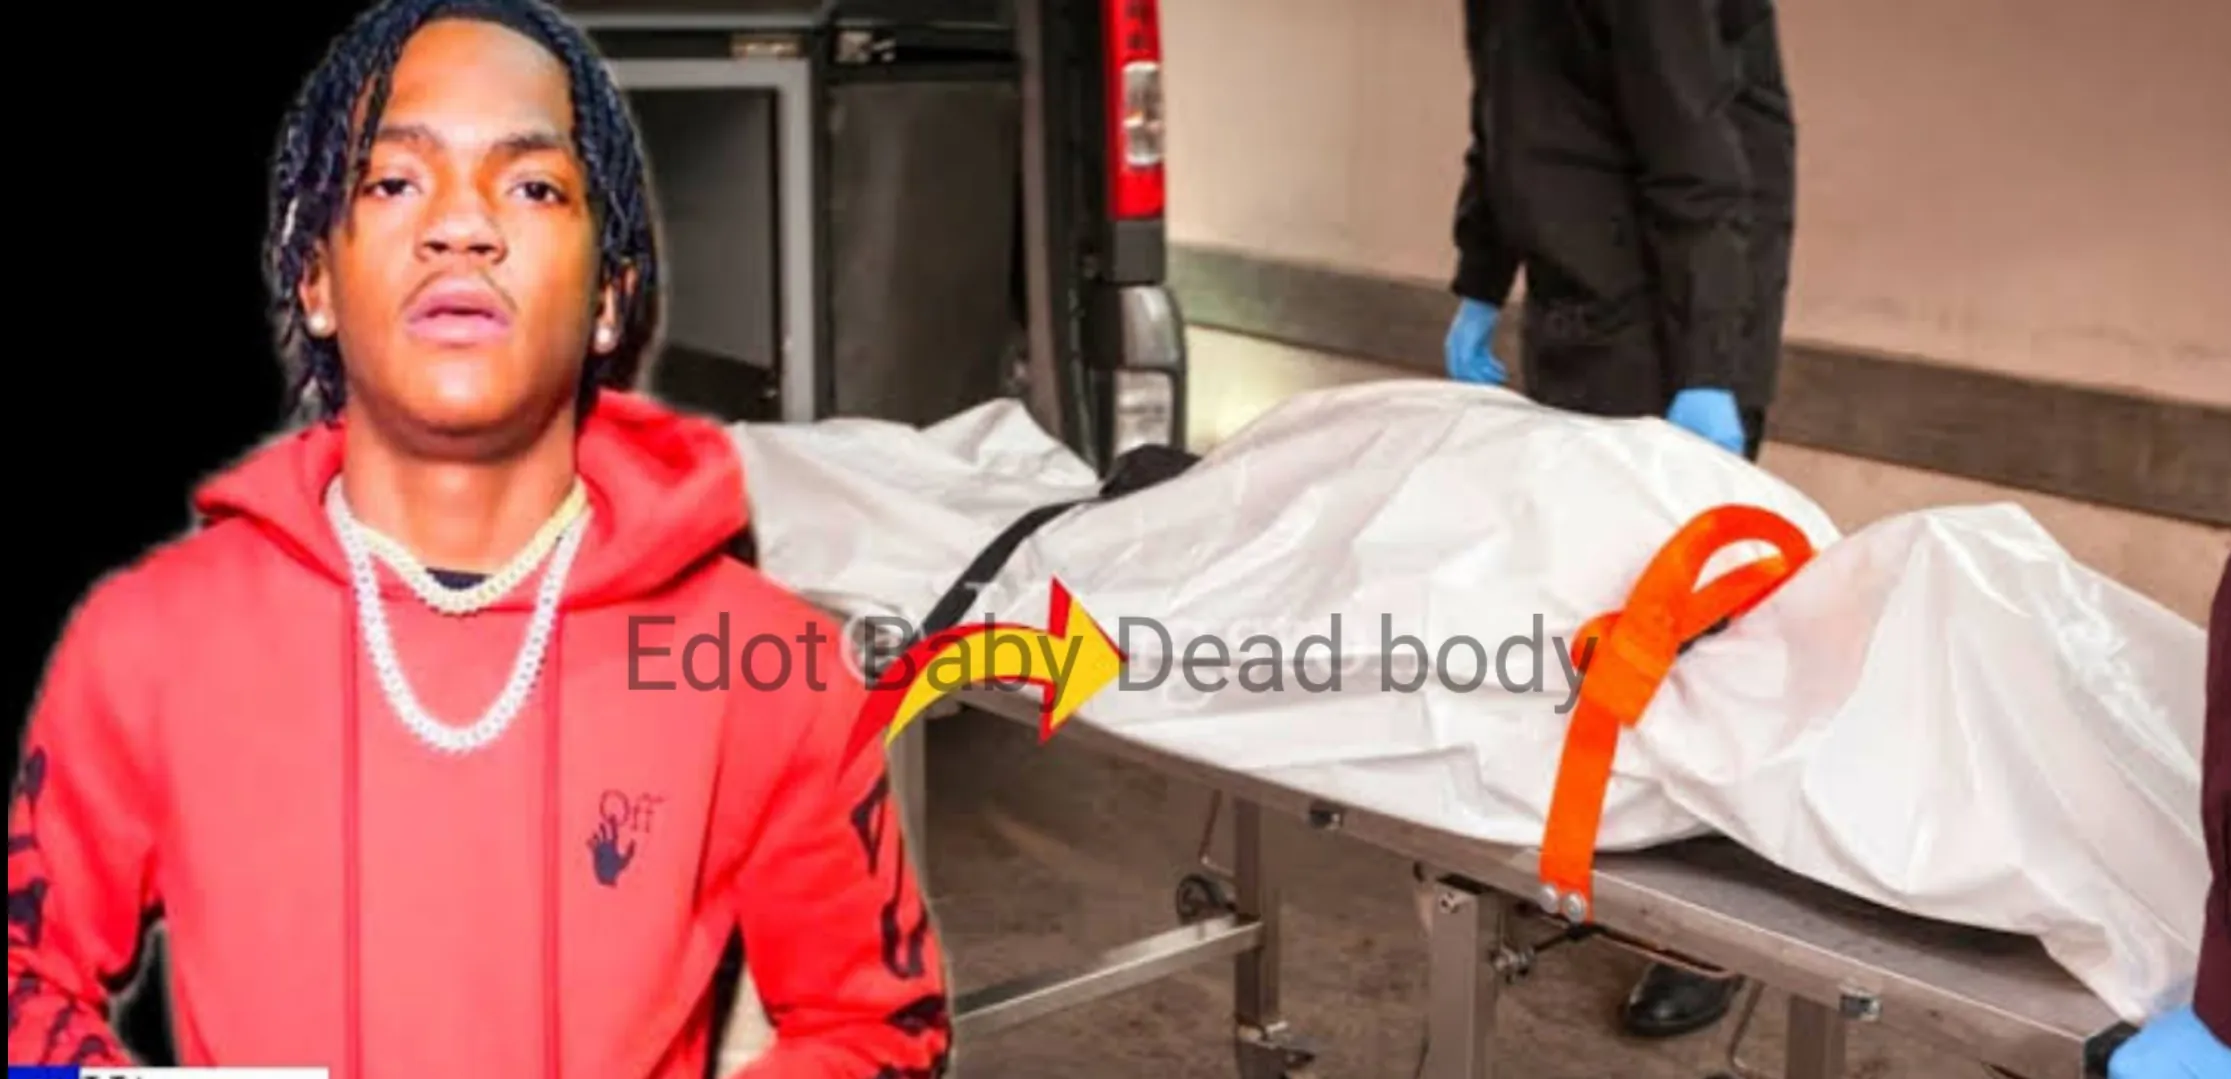 Edot baby dead body